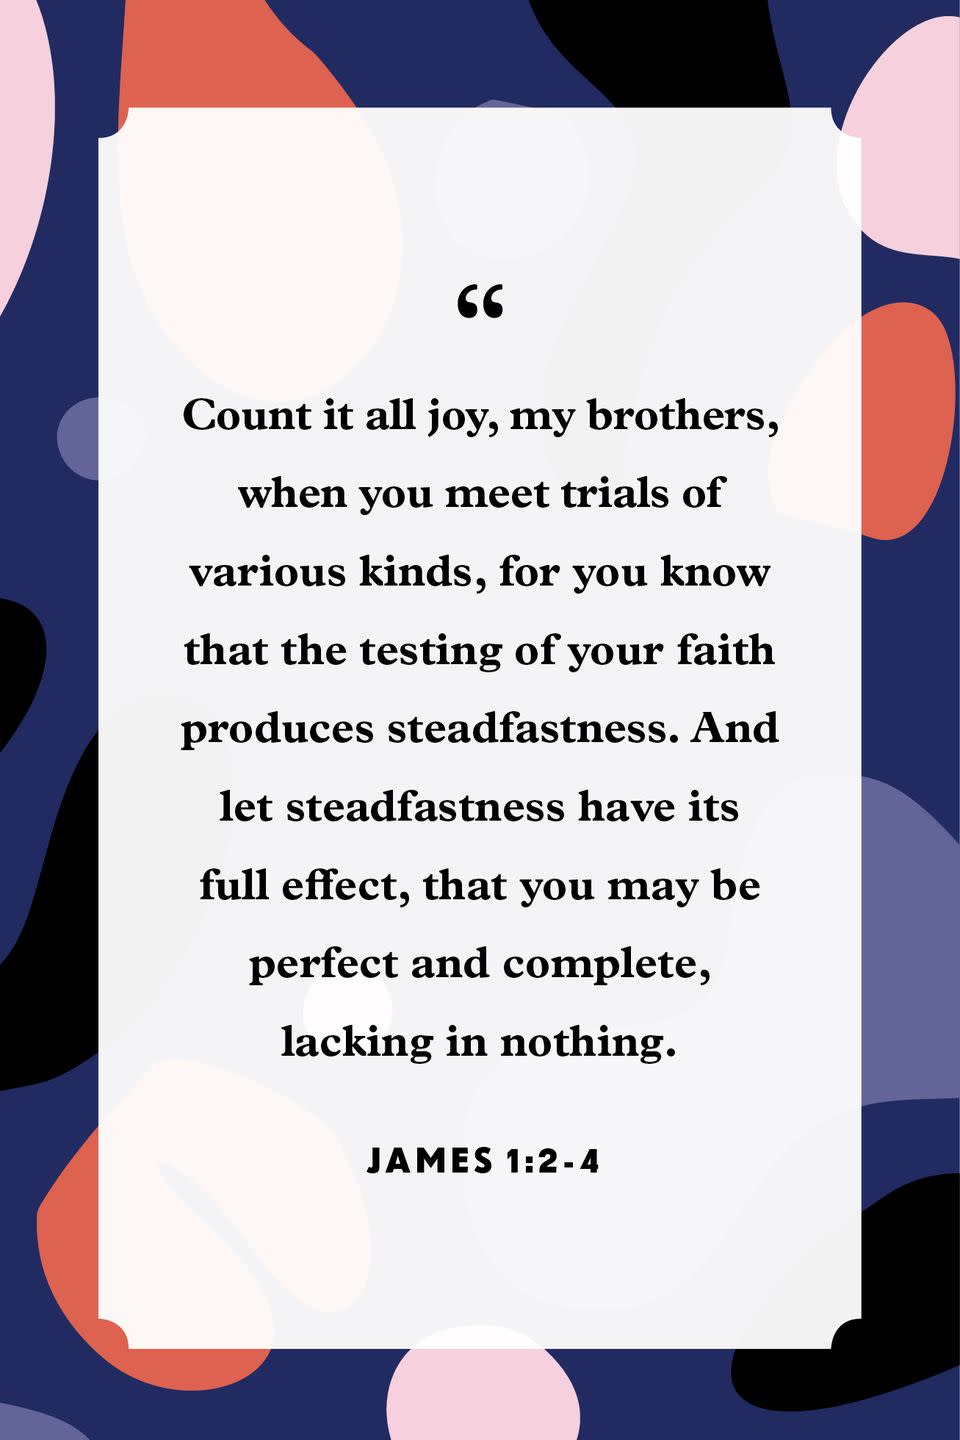 14) James 1:2-4